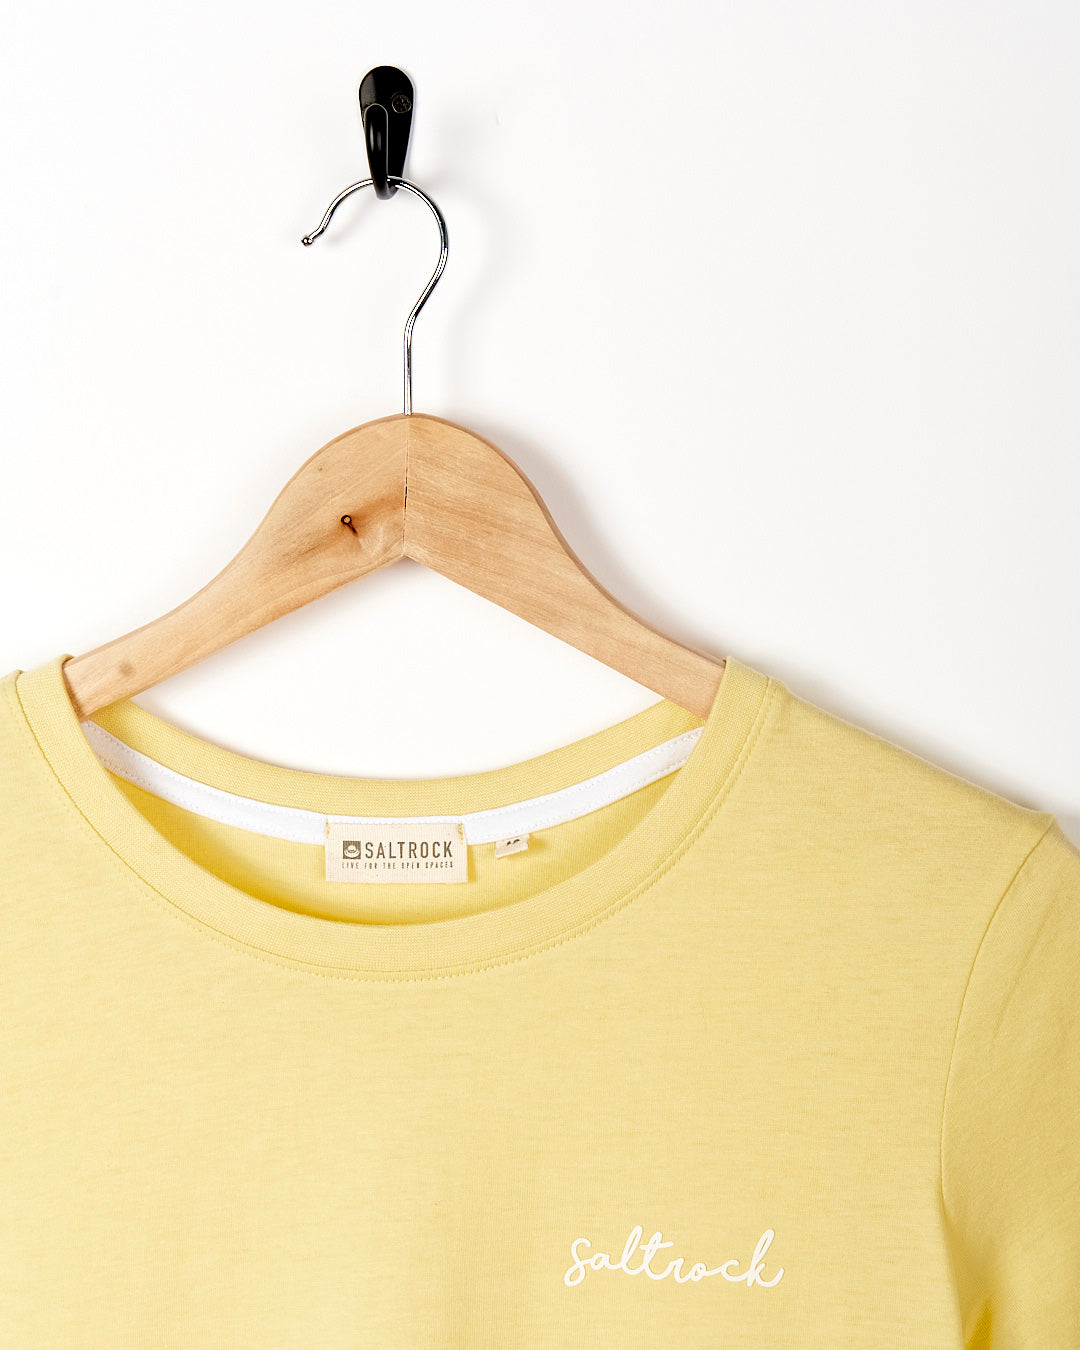 Velator - Womens Short Sleeve T-Shirt - Light Yellow